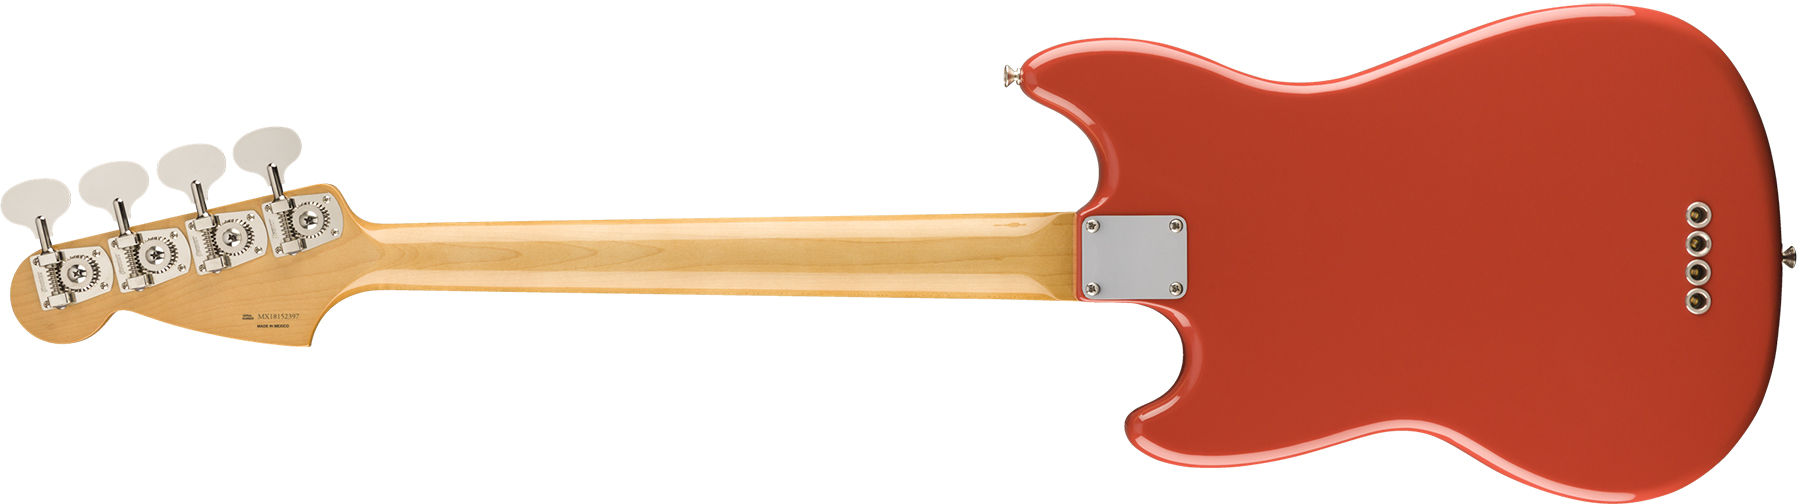 Fender Mustang Bass 60s Vintera Vintage Mex Pf - Fiesta Red - E-Bass für Kinder - Variation 1